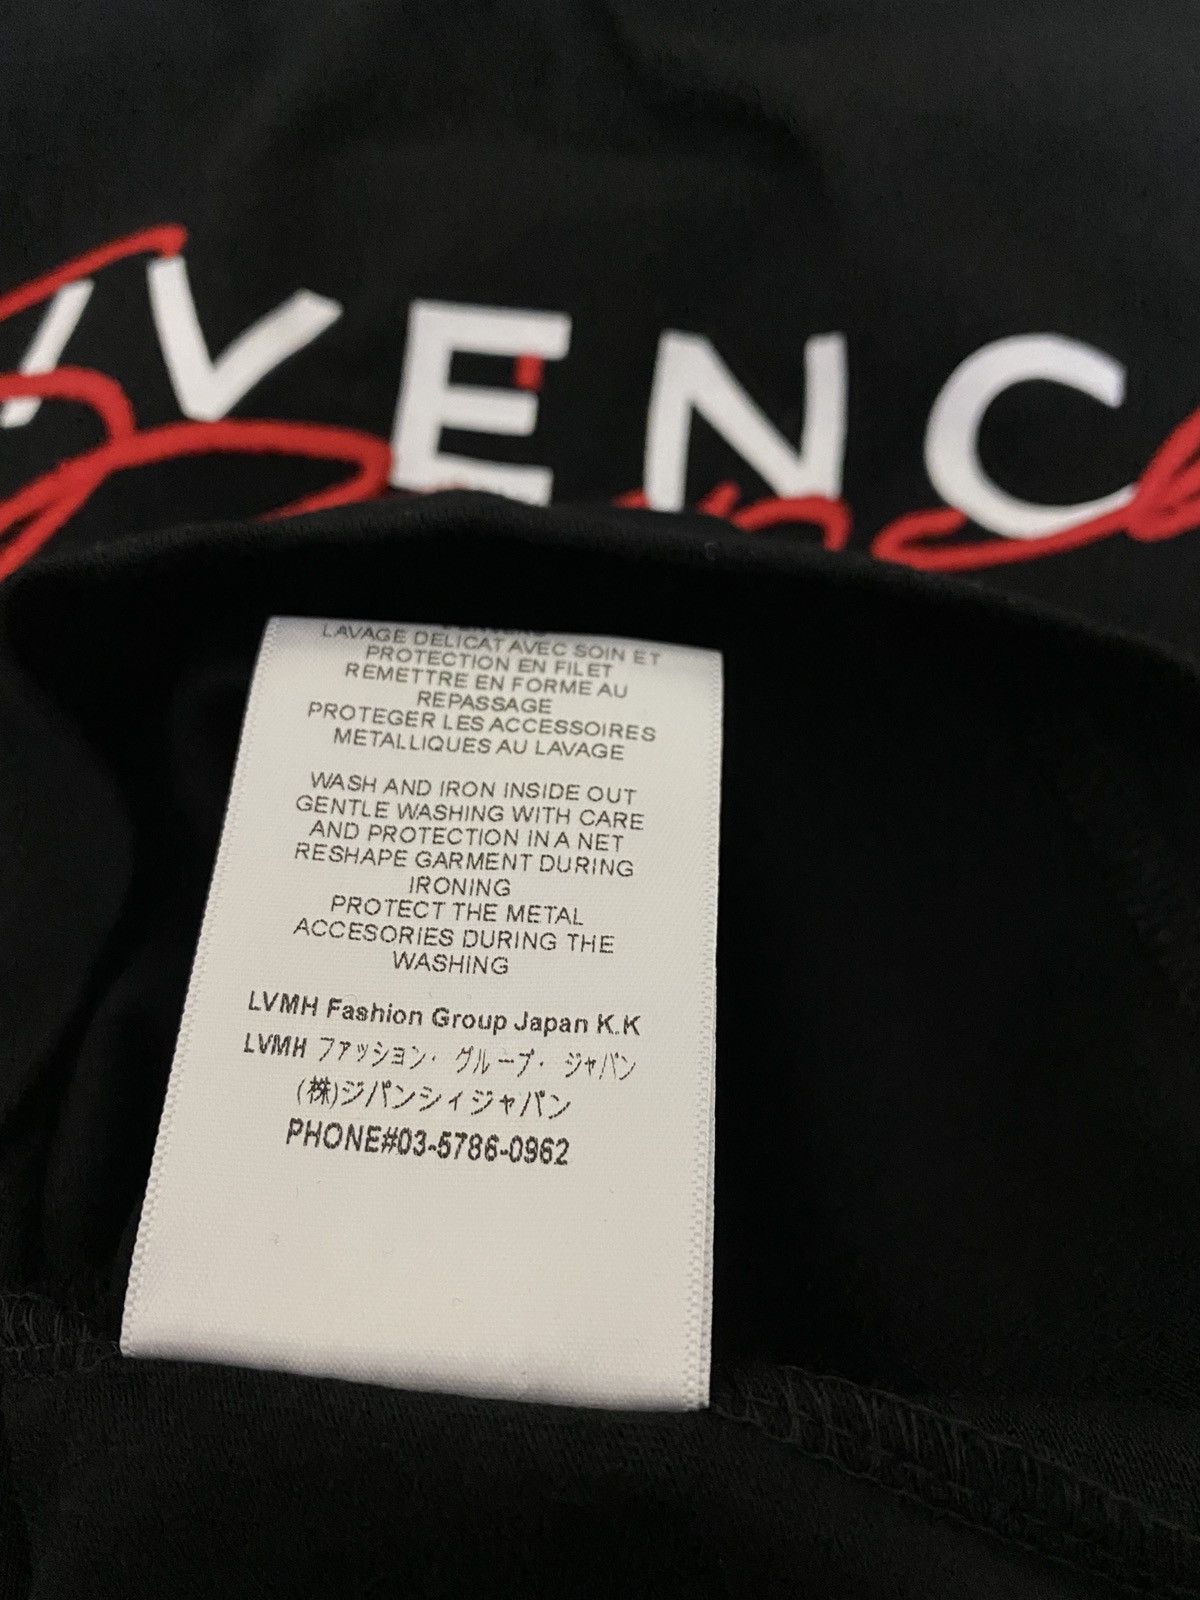 Givenchy Givenchy Paris Signature Black T-shirt Large Size BM70UK3002 Size US L / EU 52-54 / 3 - 7 Thumbnail